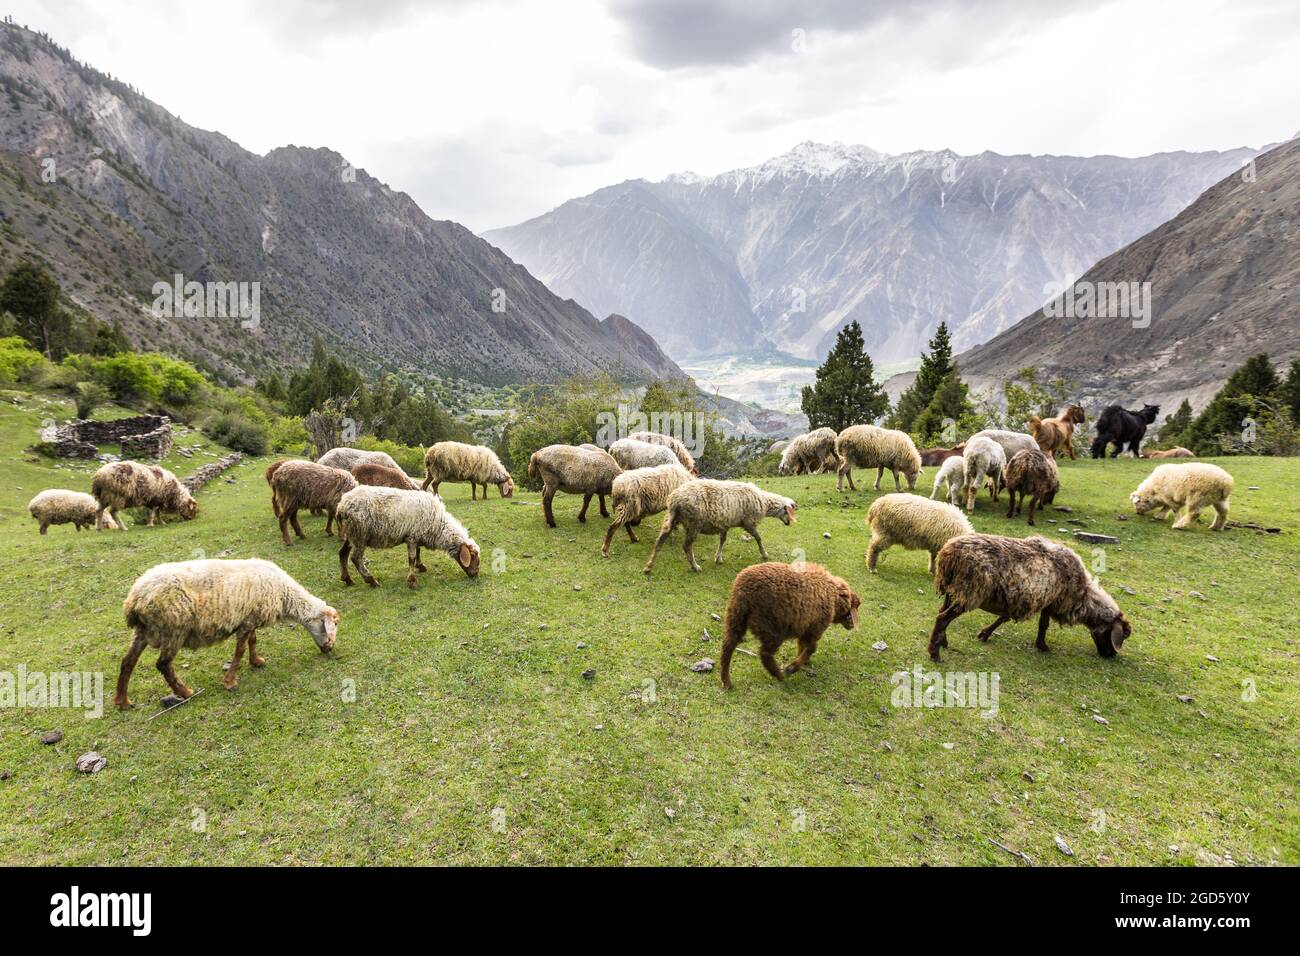 Sheep grazing on green mountain meadow Stock Photo